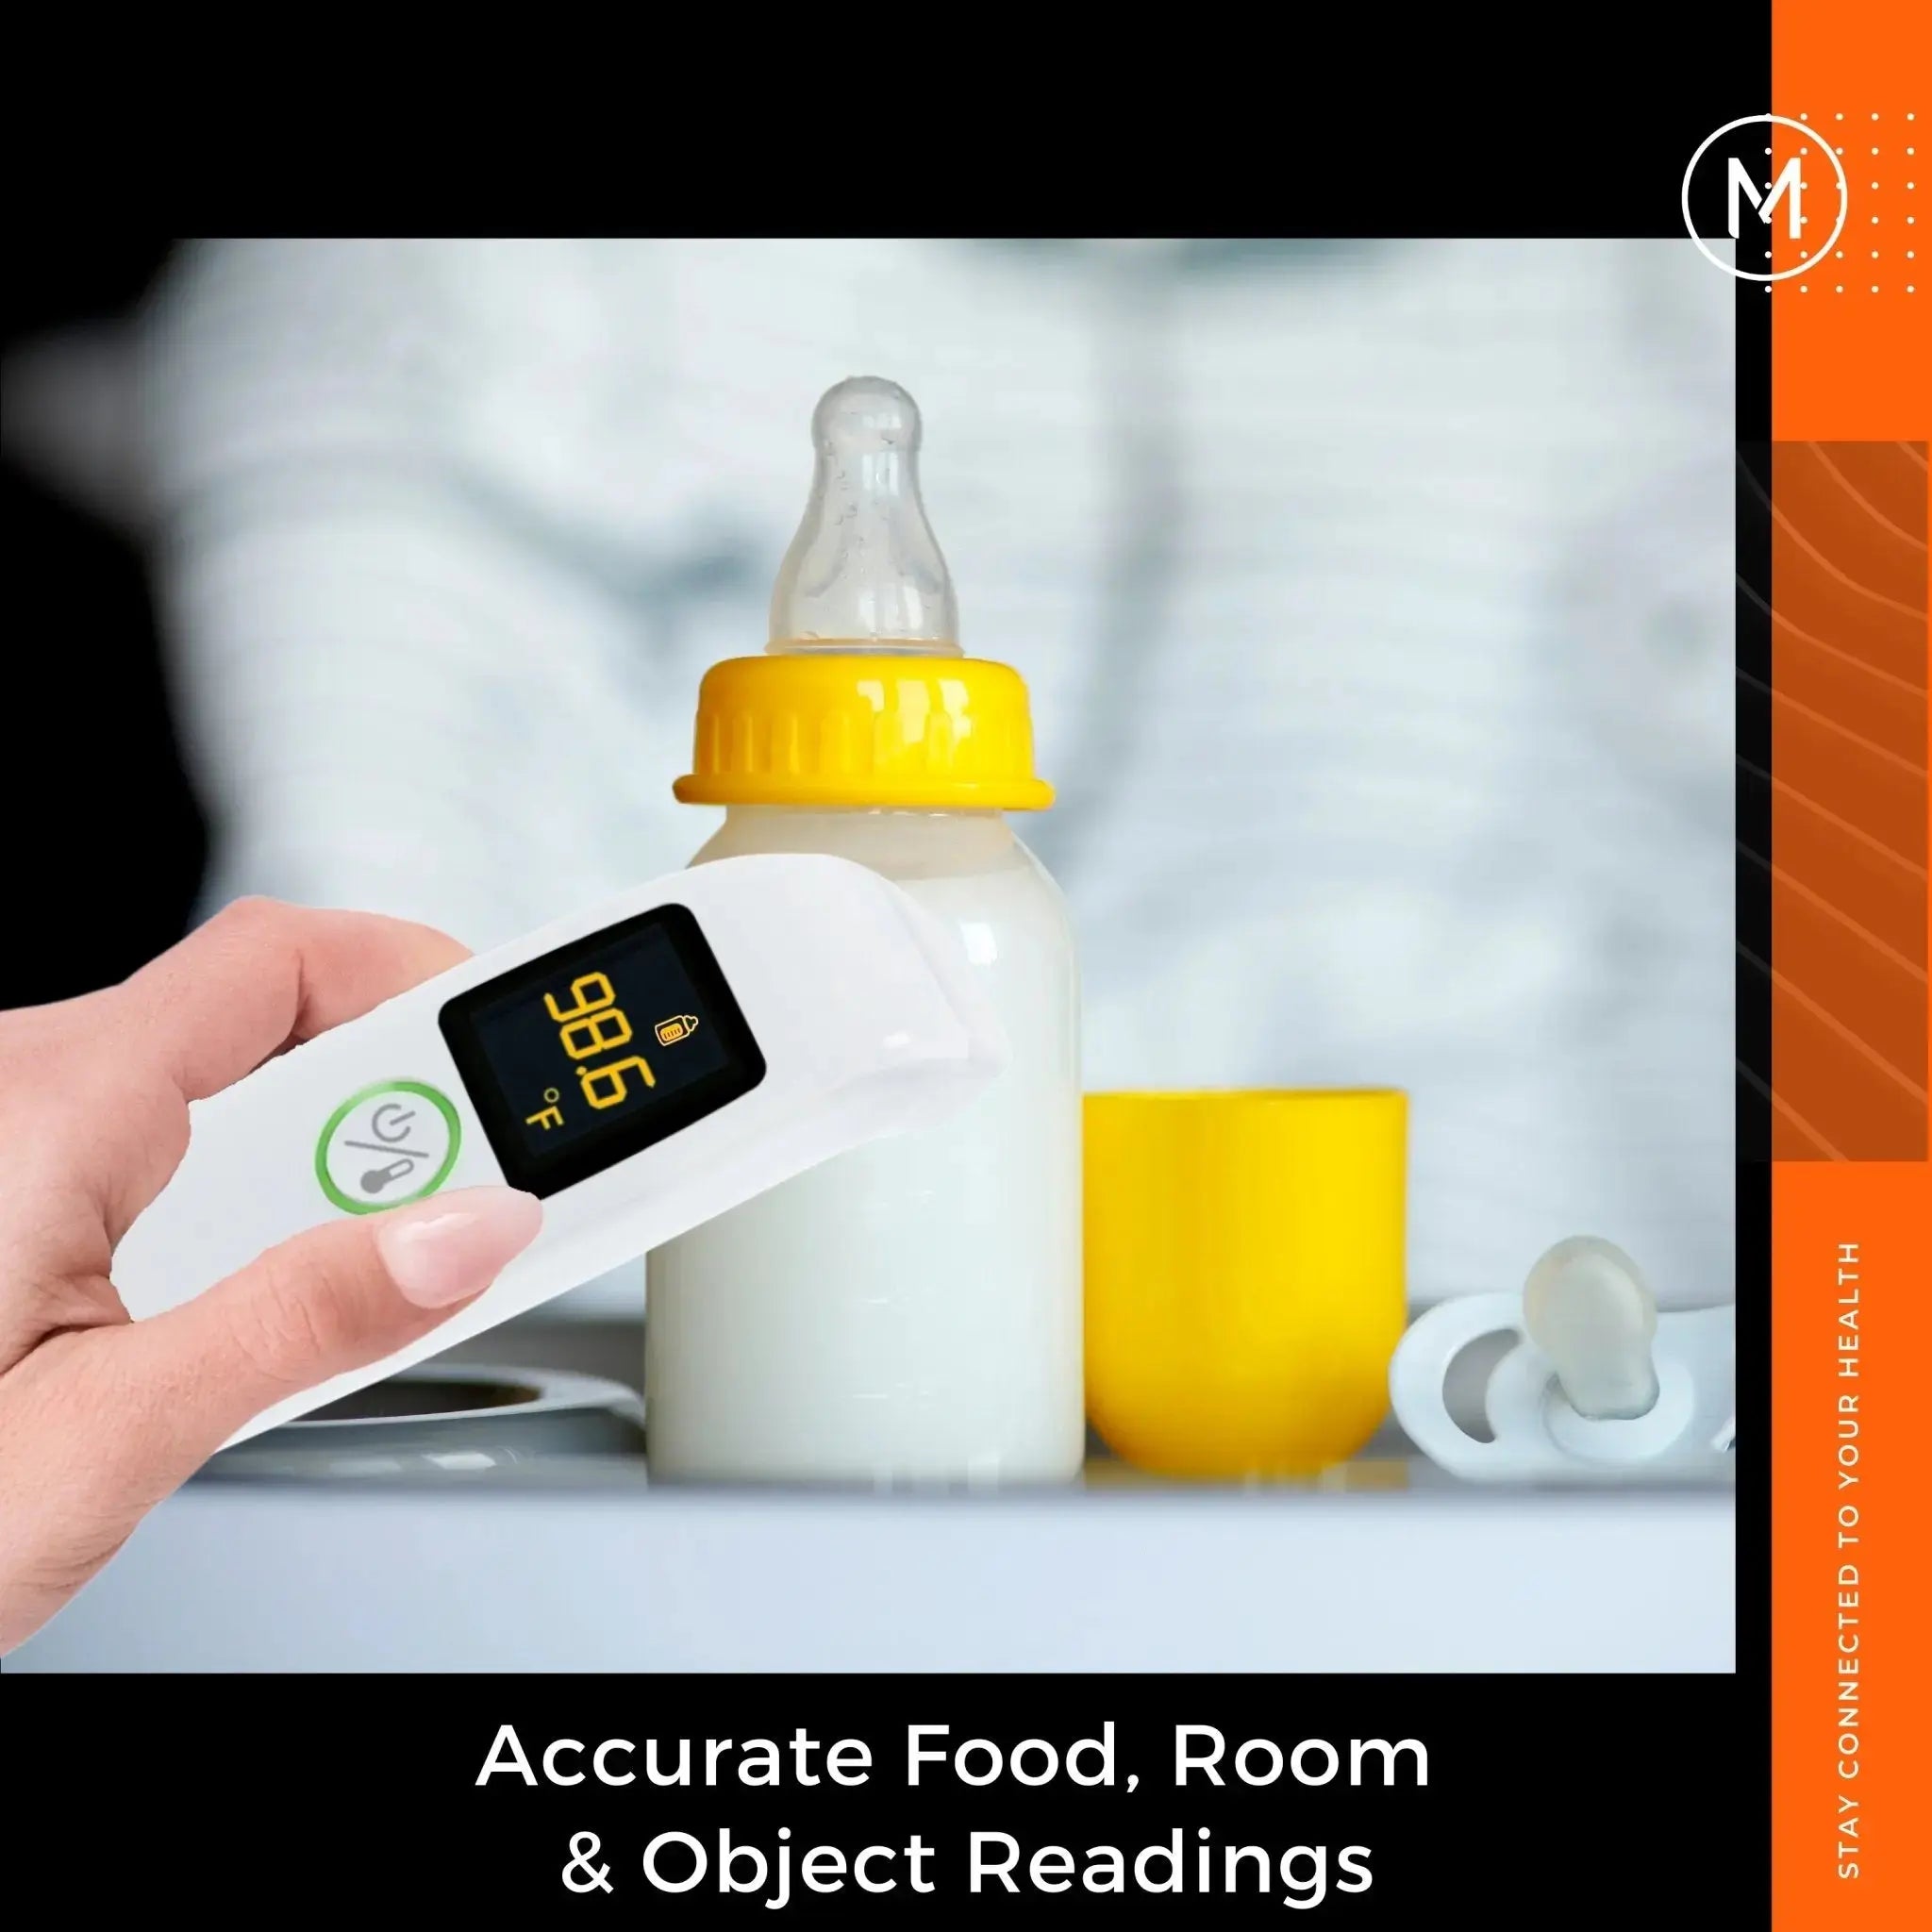 Thermometer for measuring body, room & milk temperature